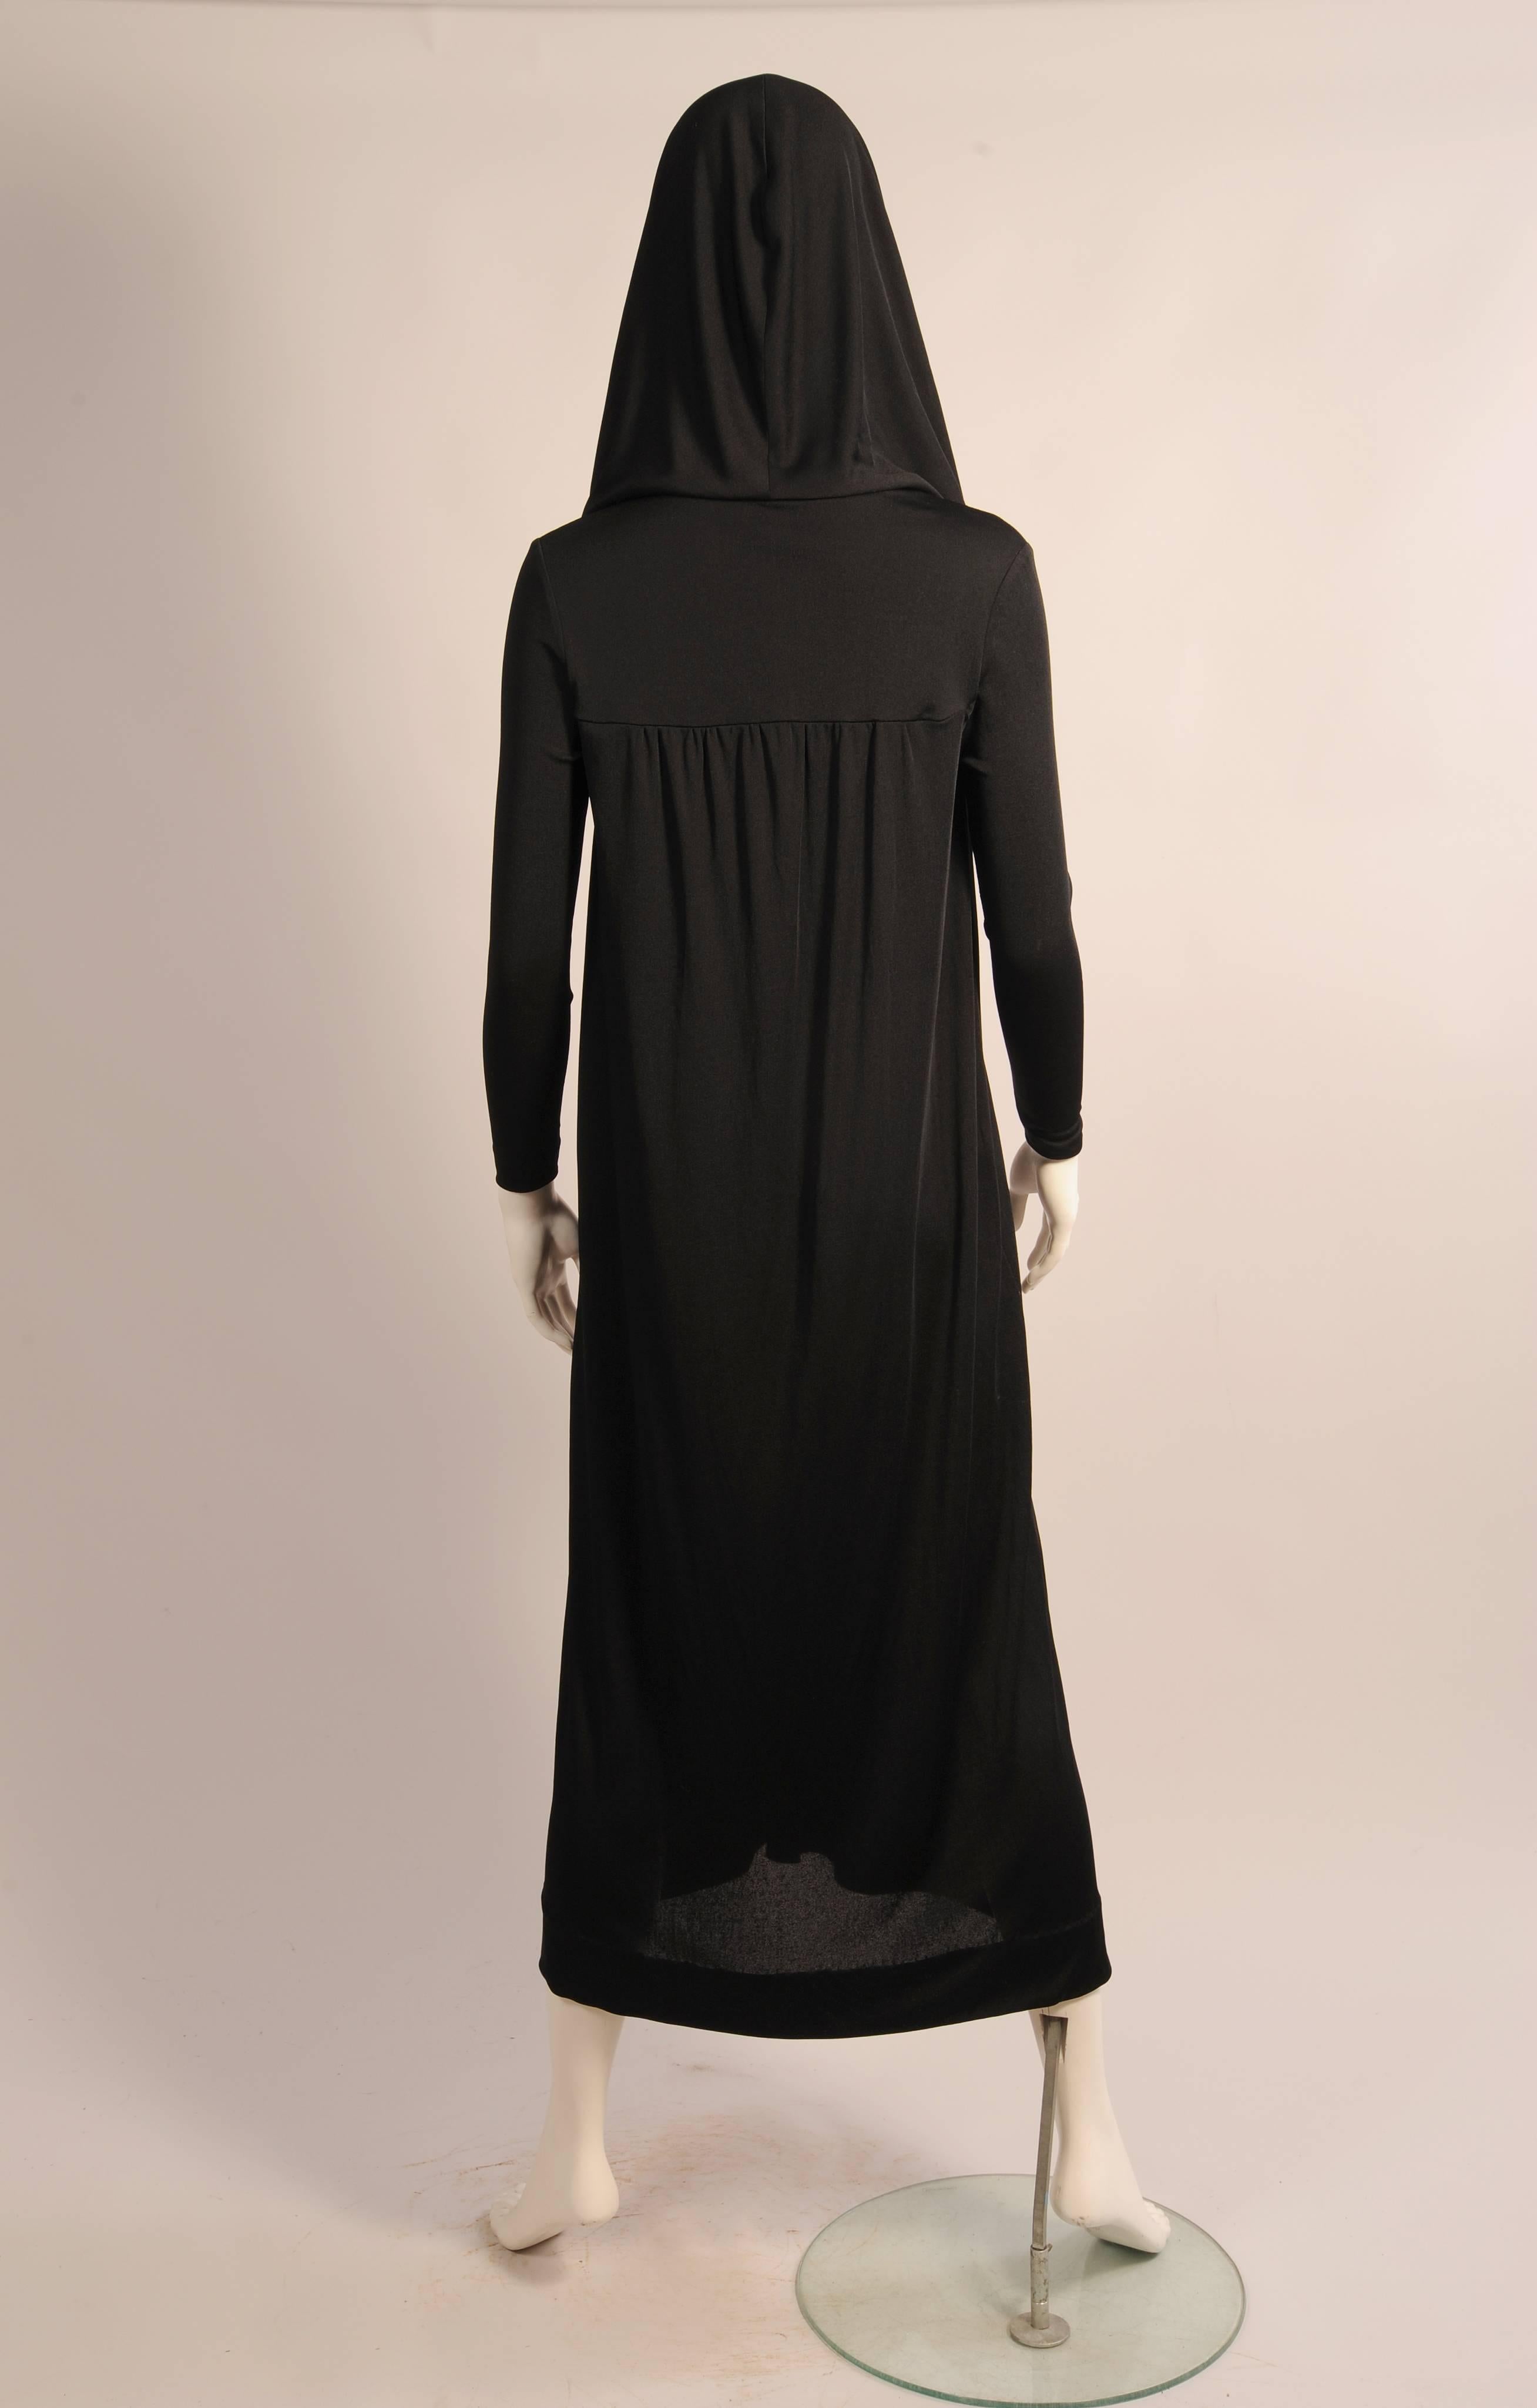 monastic clothing